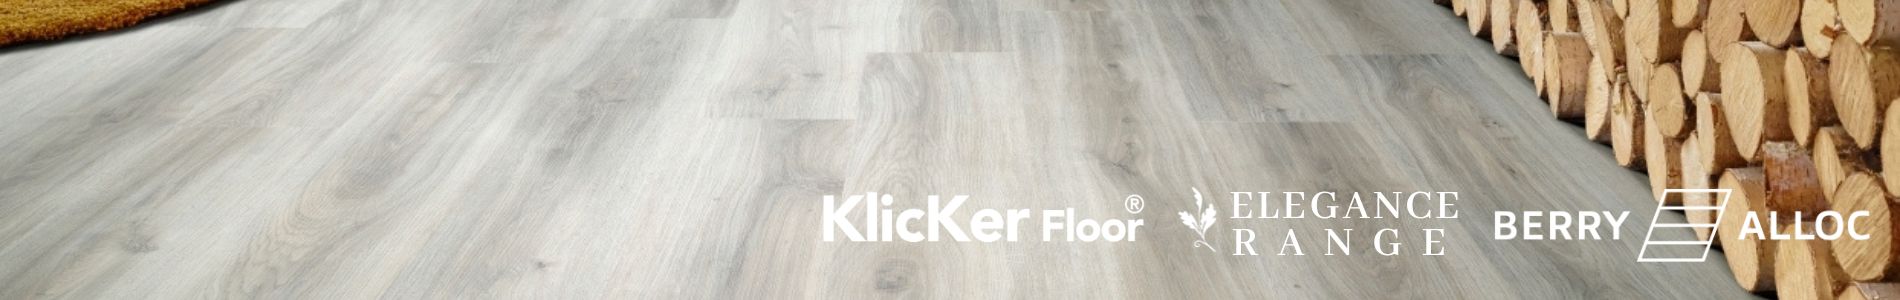 Luxury vinyl tile flooring